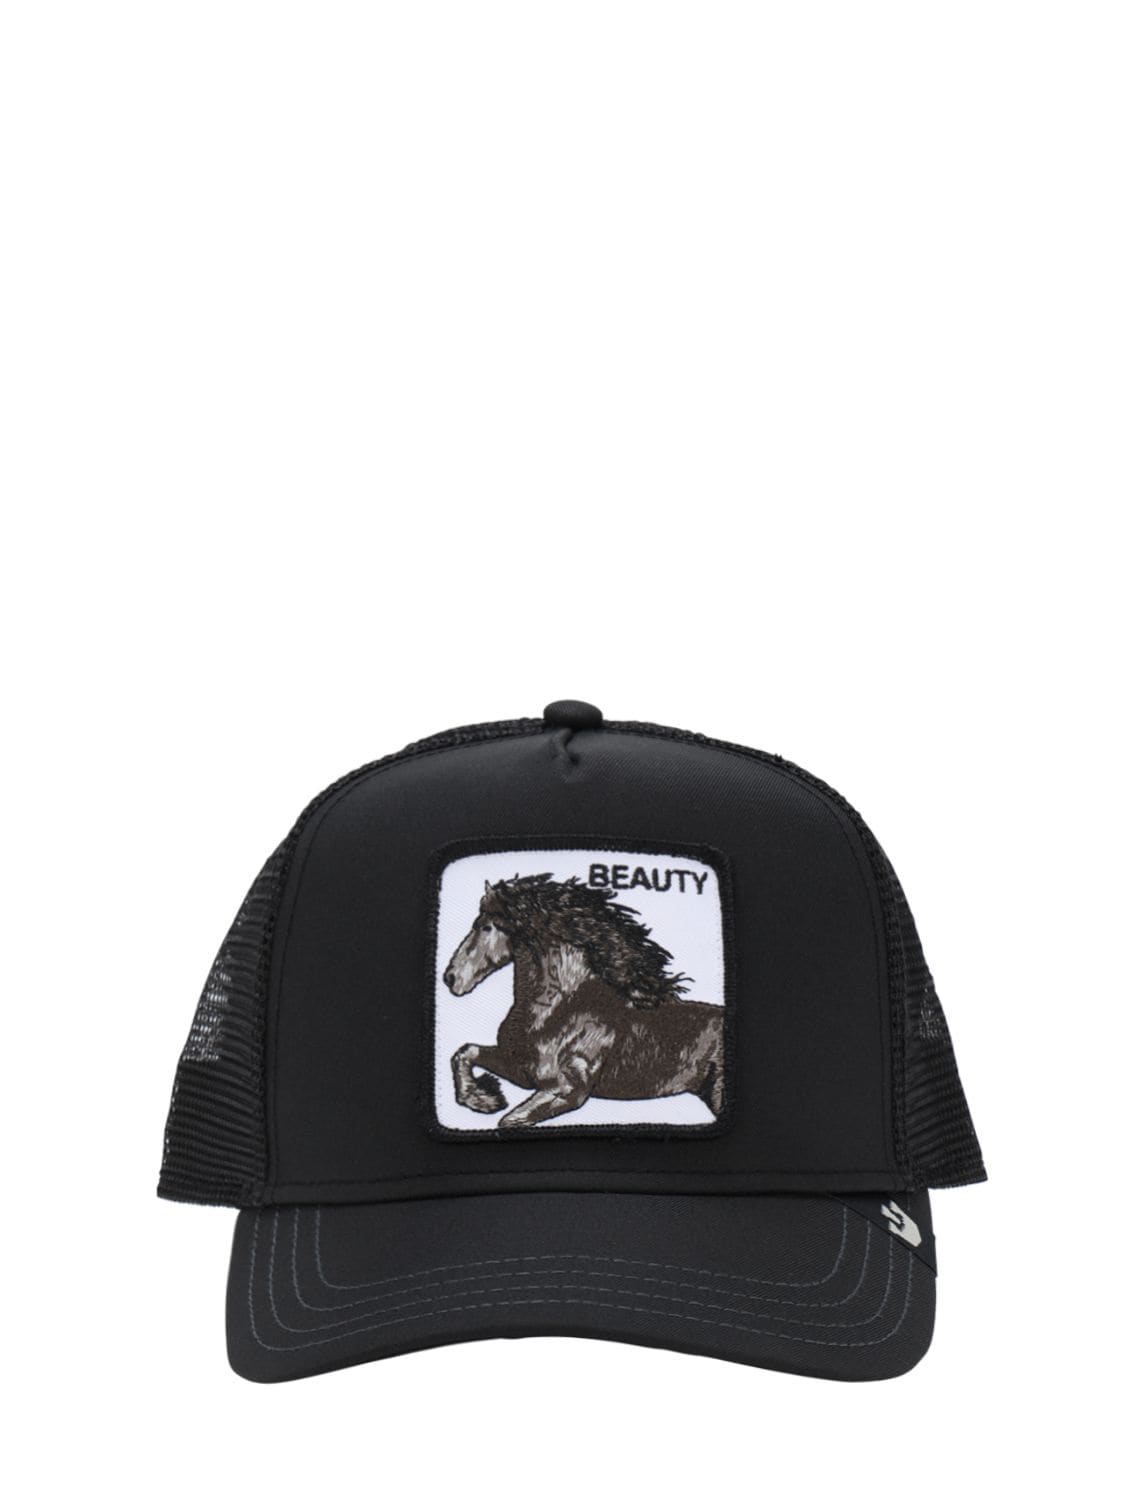 Goorin Bros Black Beauty Trucker Hat